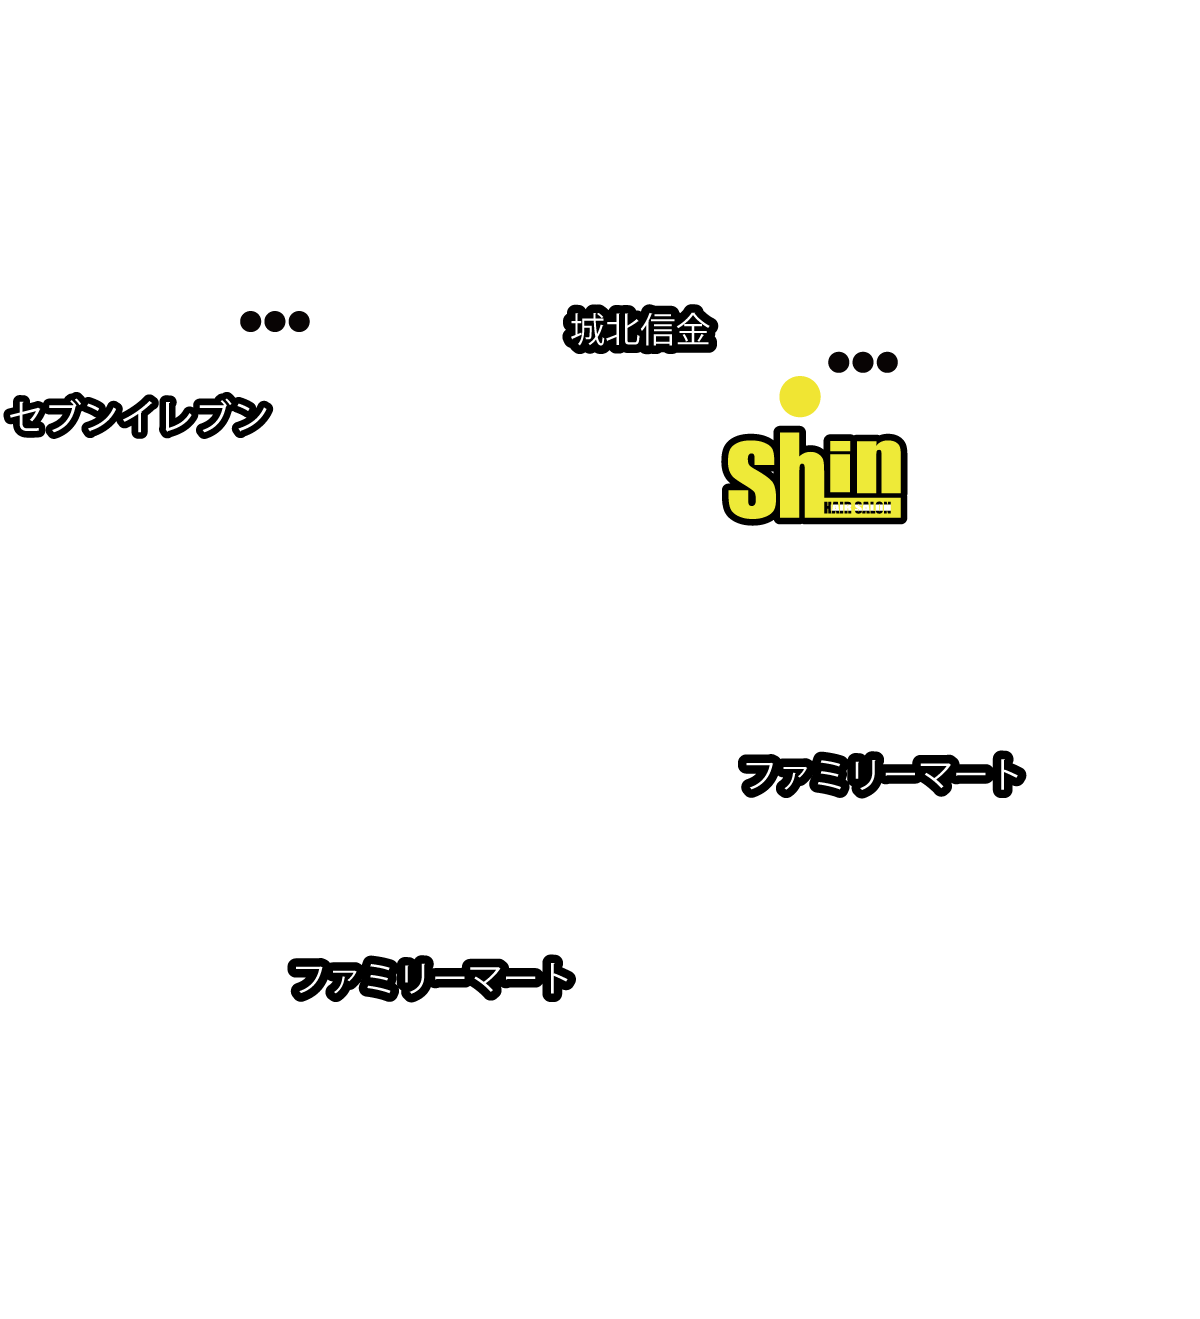 JR王子駅 北口から徒歩5分